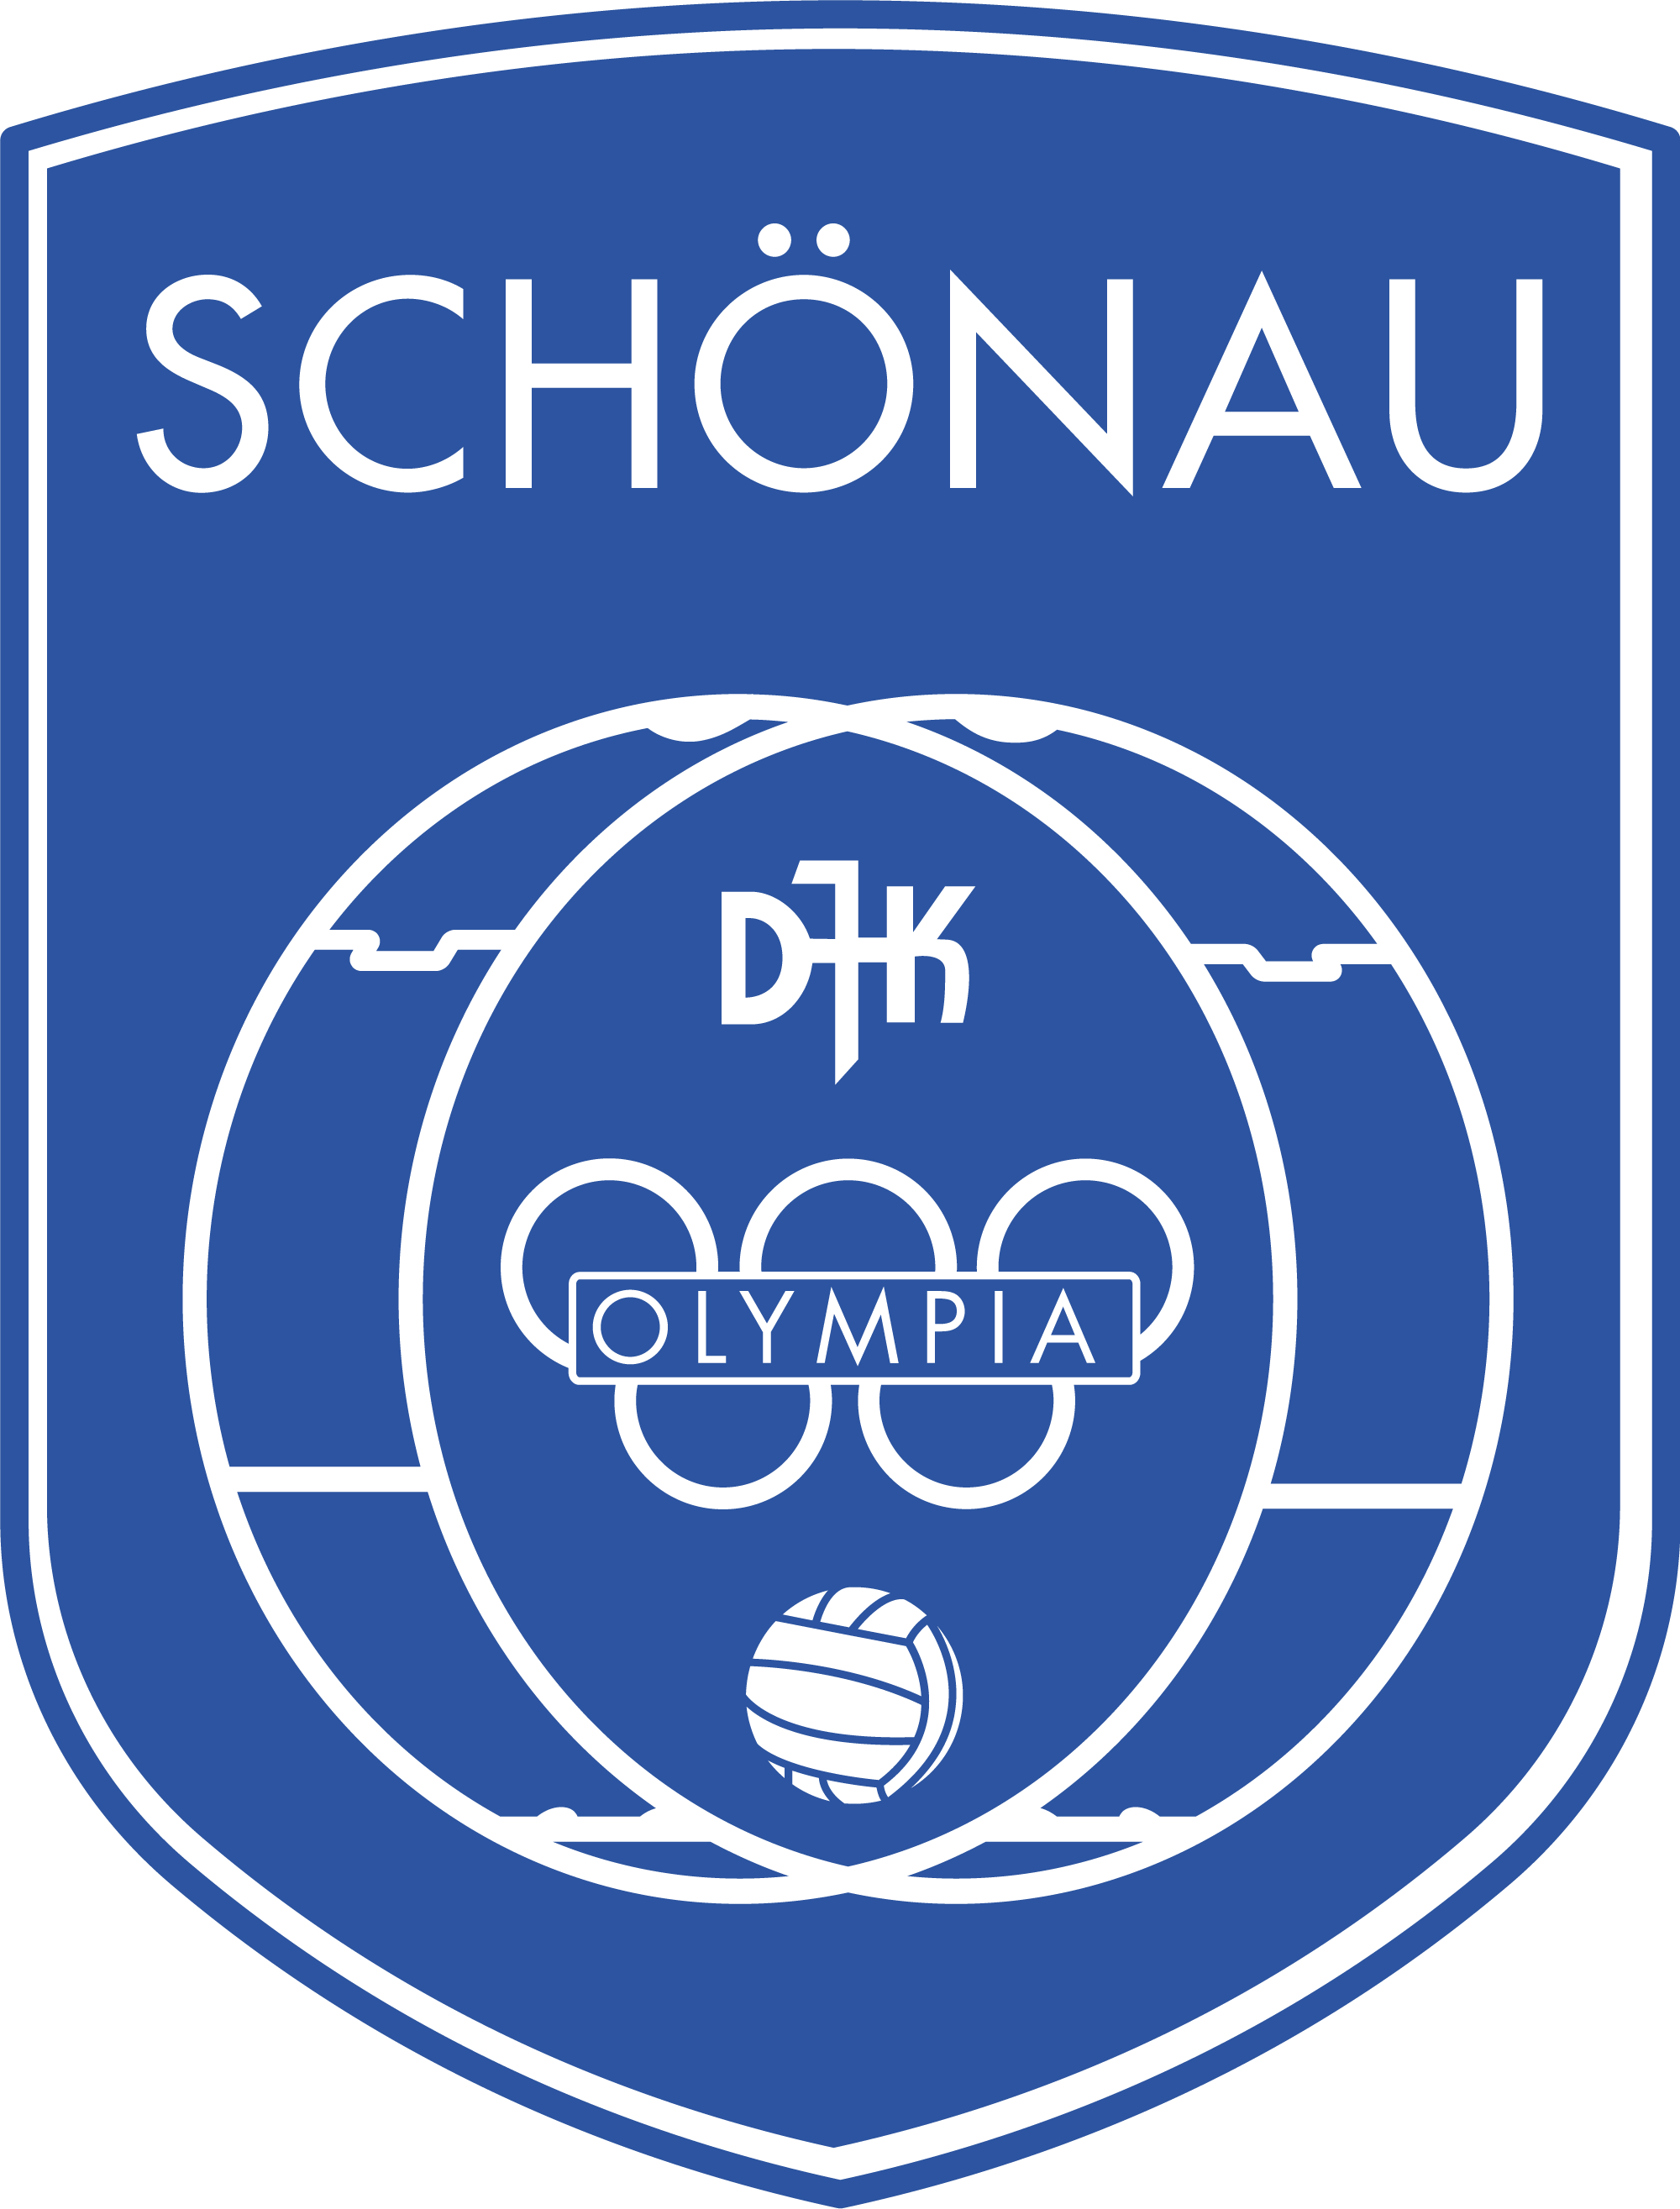 DJK Olympia Schönau